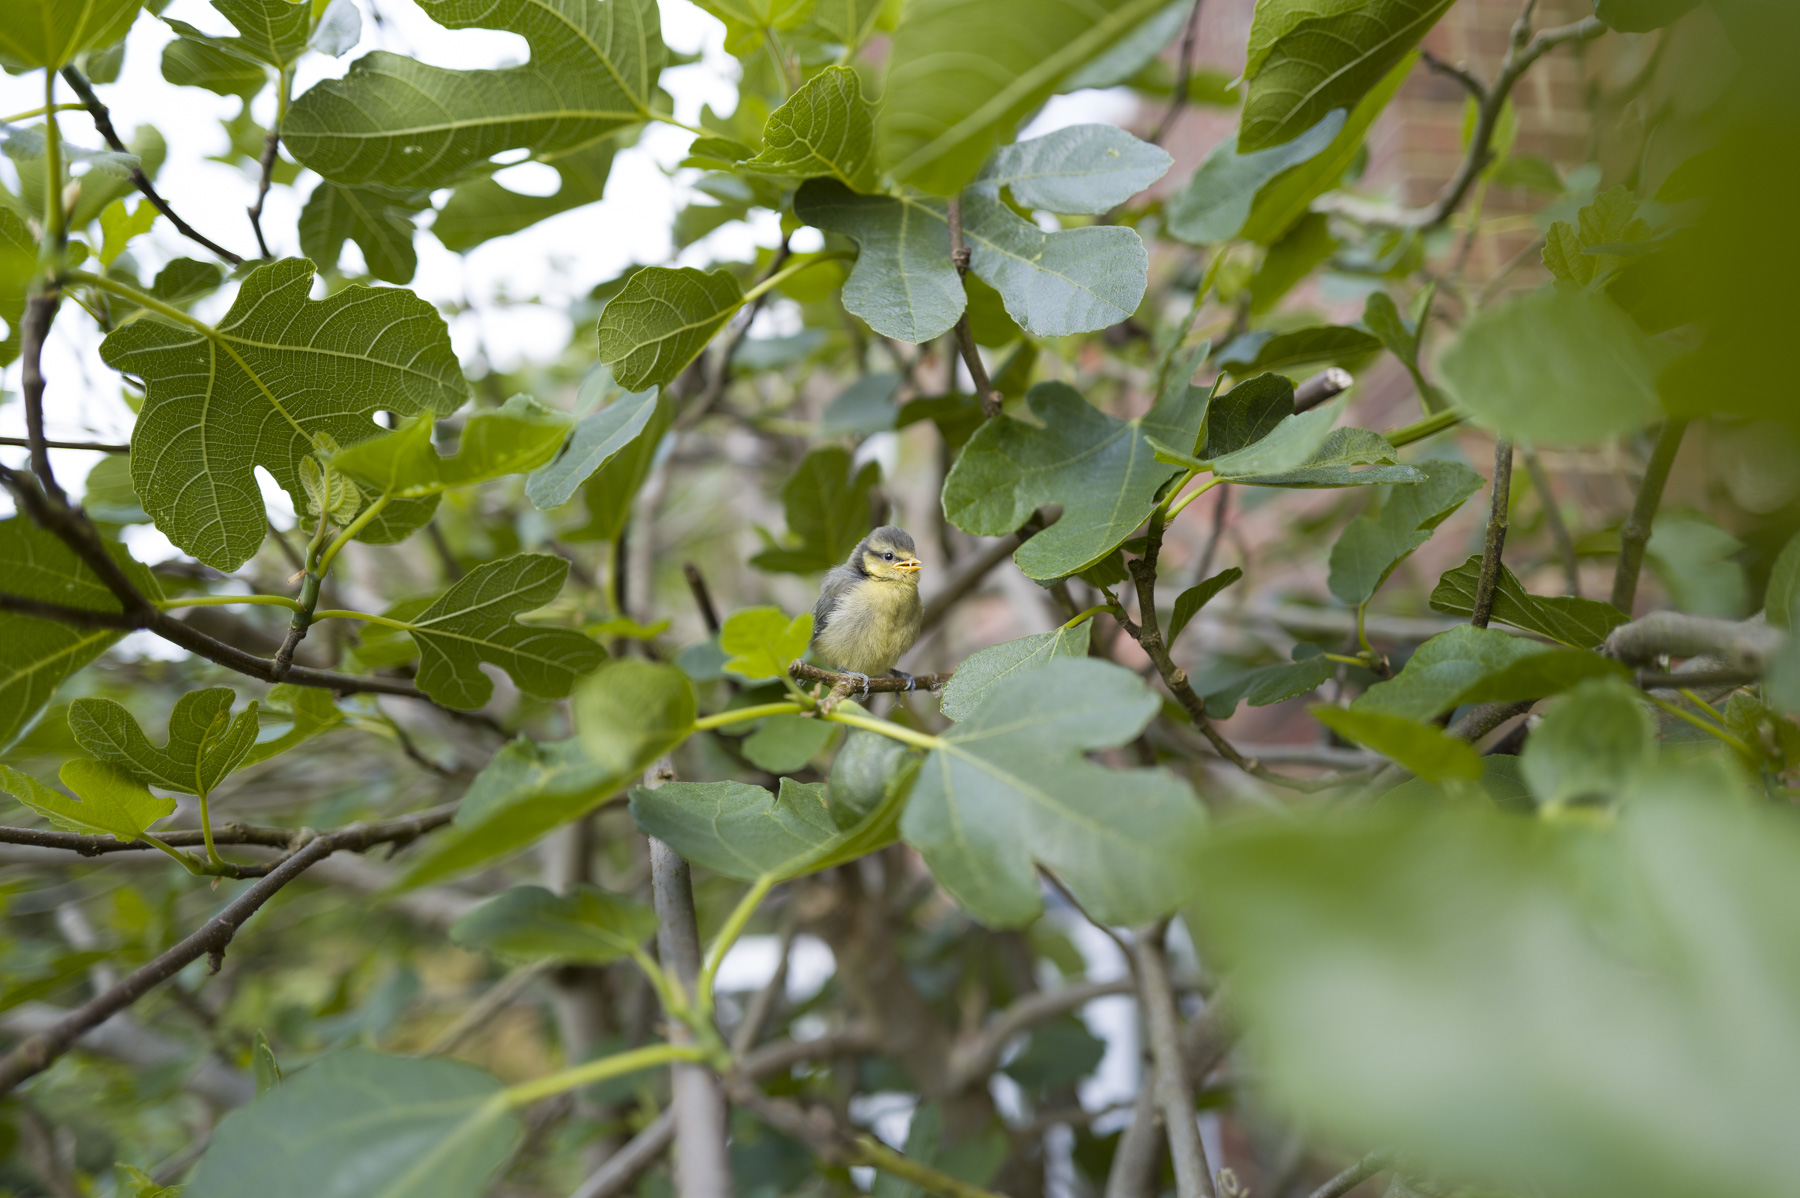 Garden bird wildlife photo at the Leica Q3's full 28mm field of view